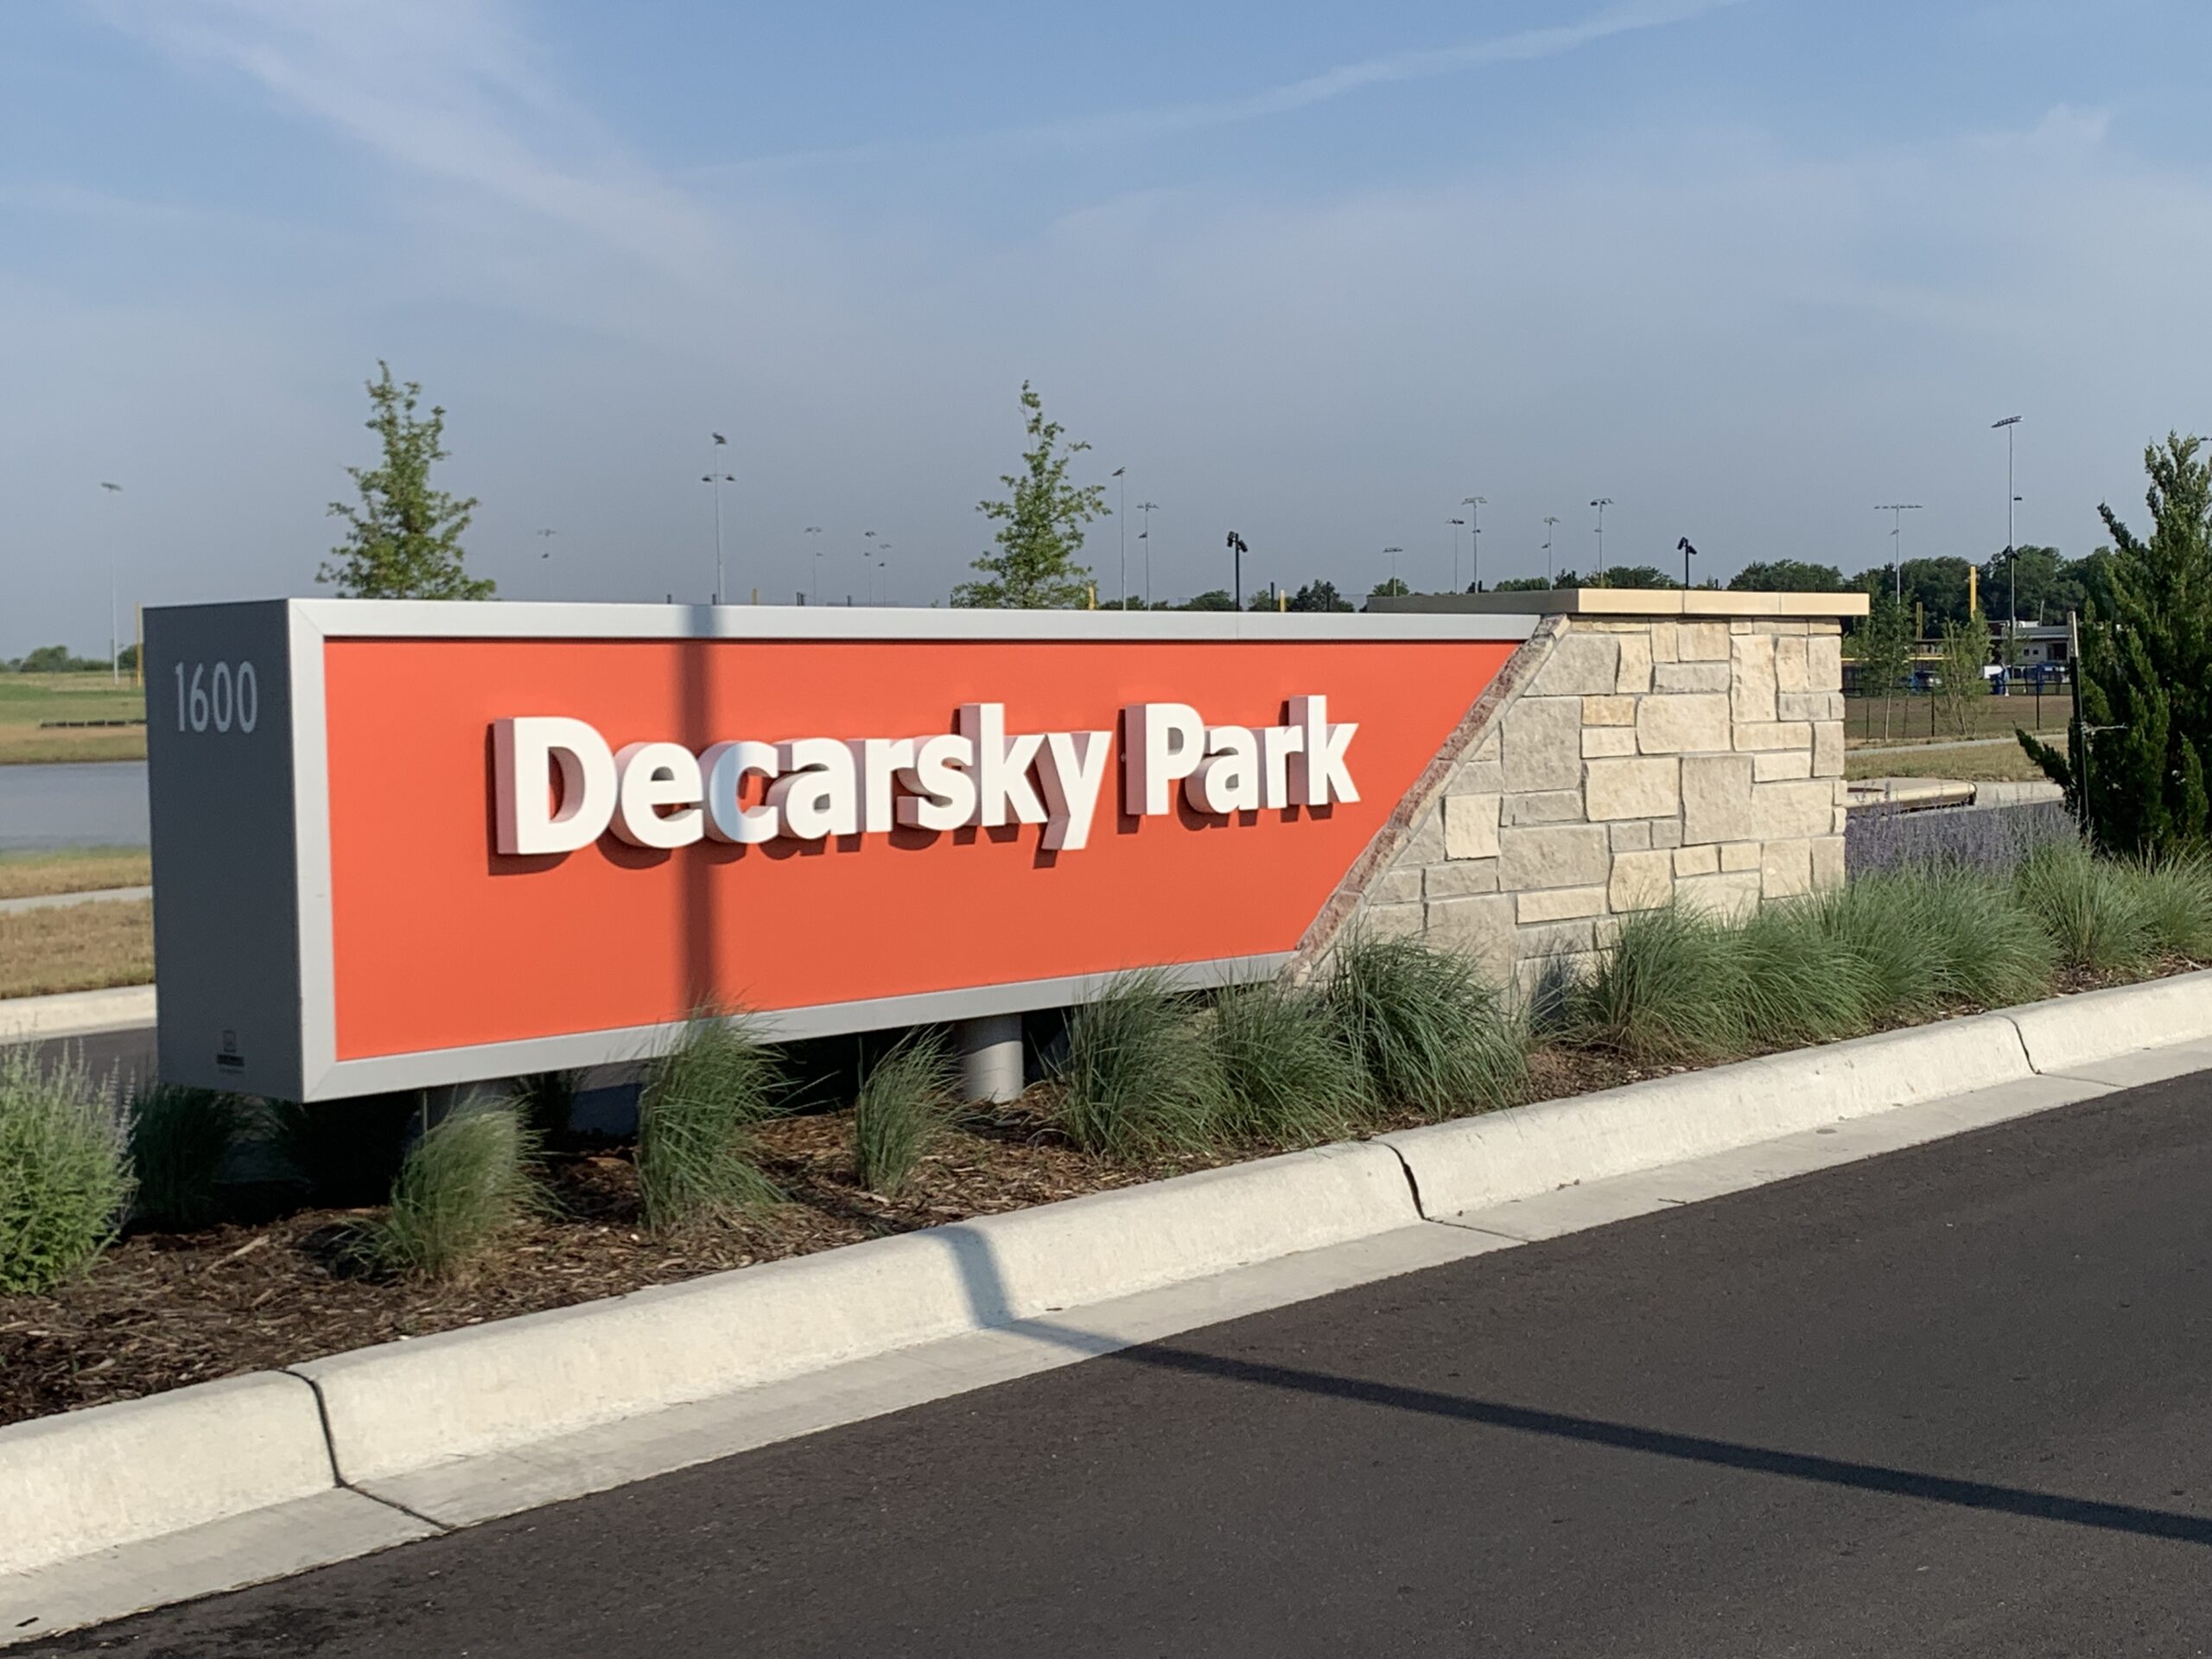 Decarsky Park 